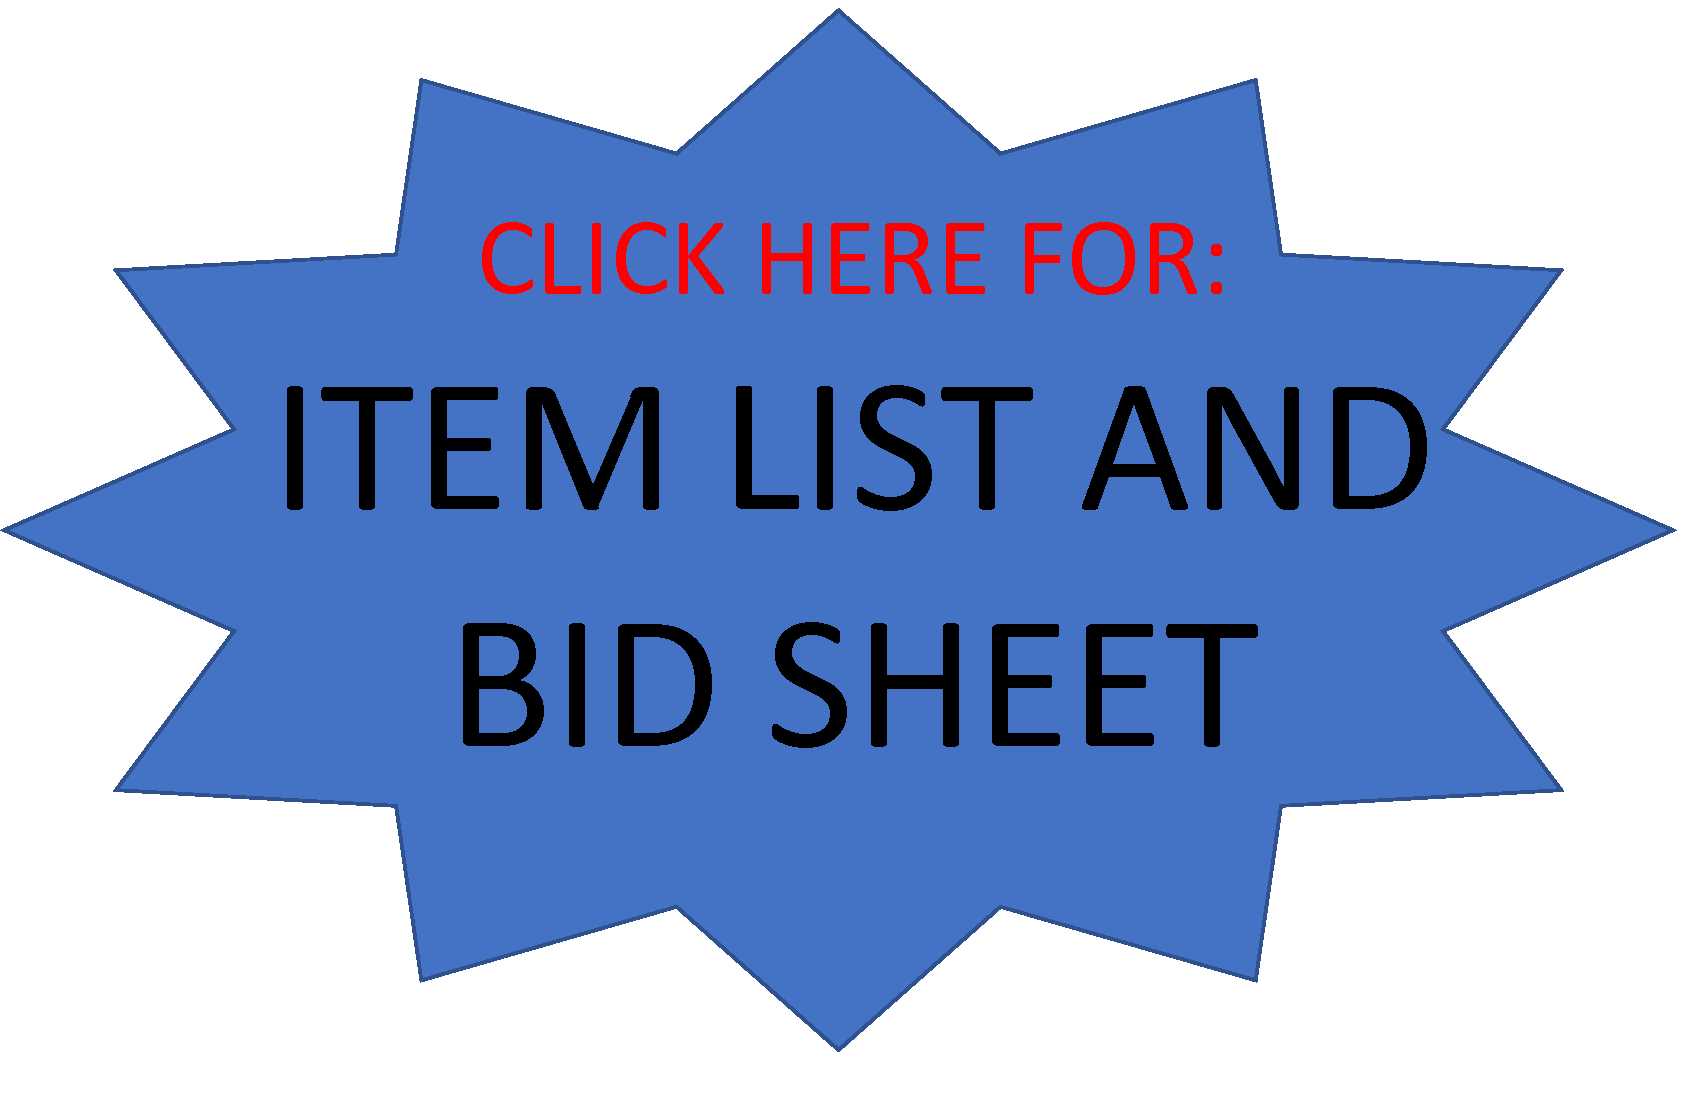 Surplus Item List and Bid Sheet